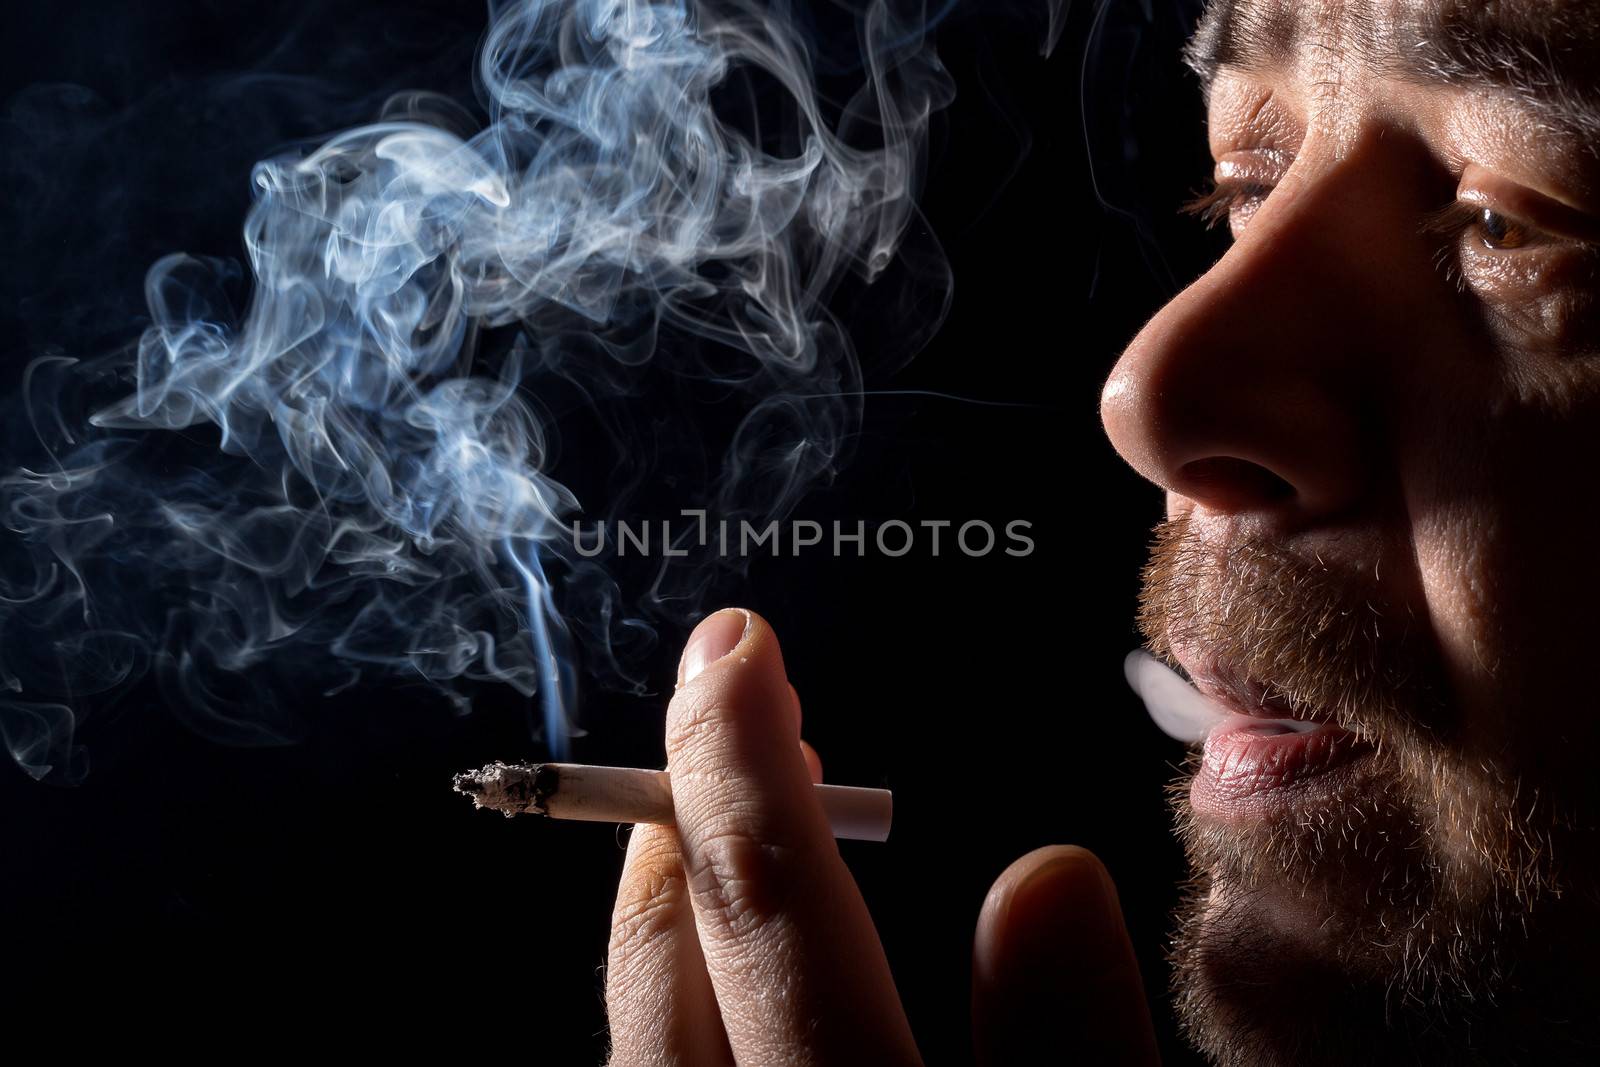 Portrait man smoking cigarette, closeup on black background